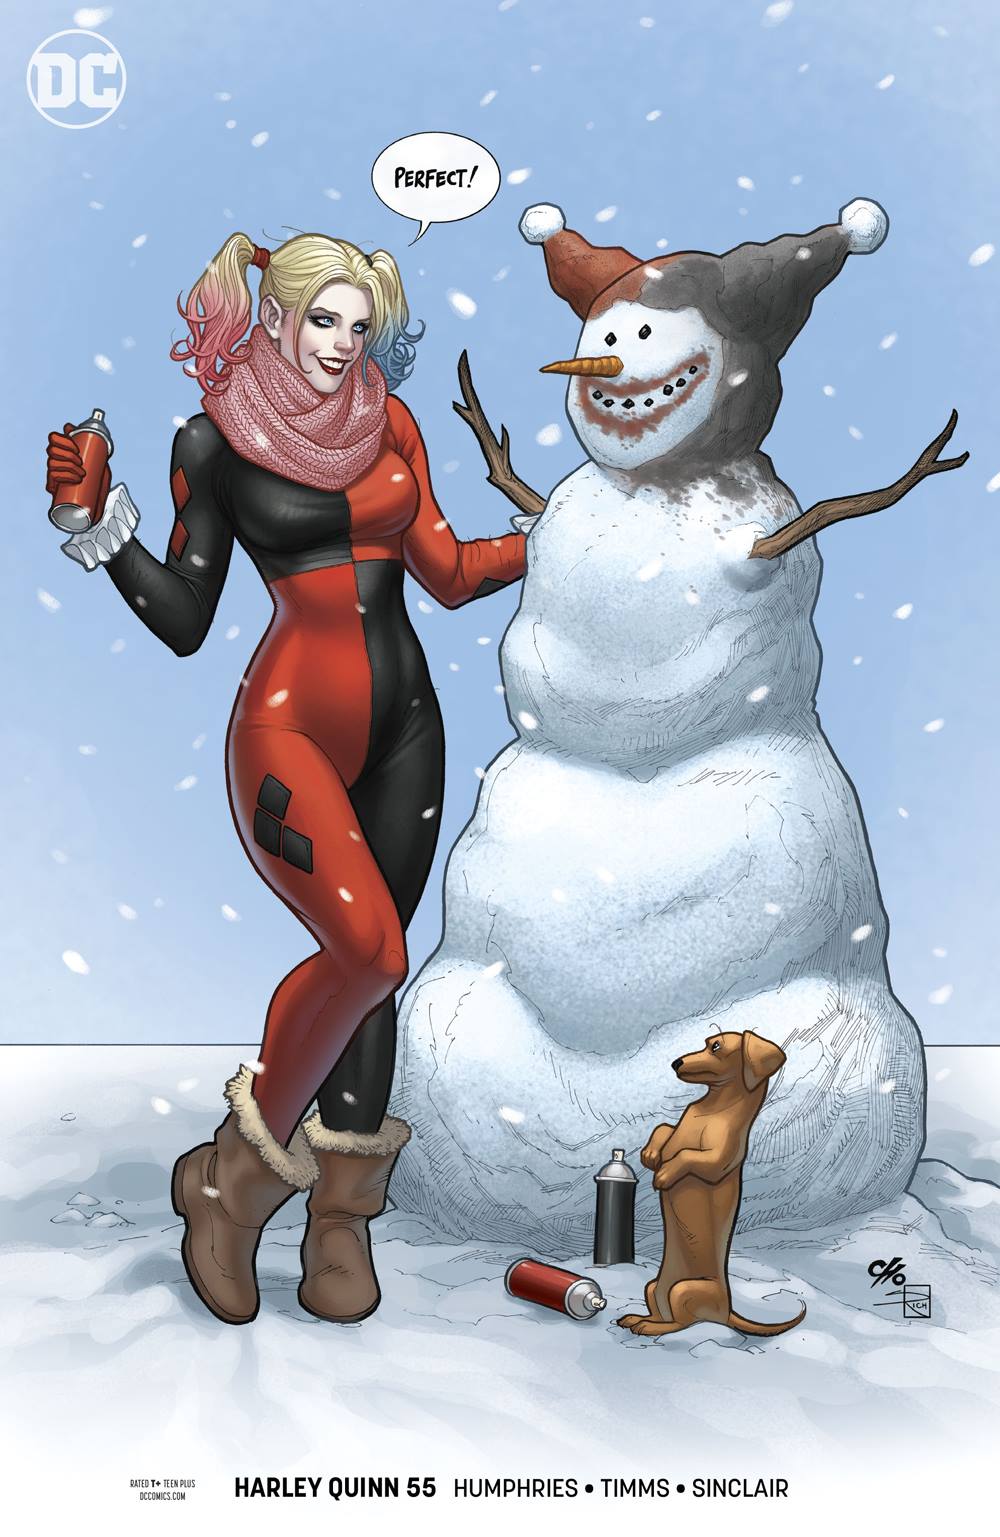 General 1000x1537 Frank Cho Harley Quinn humor DC Comics snowman Batman villains snow dog blonde women boots winter